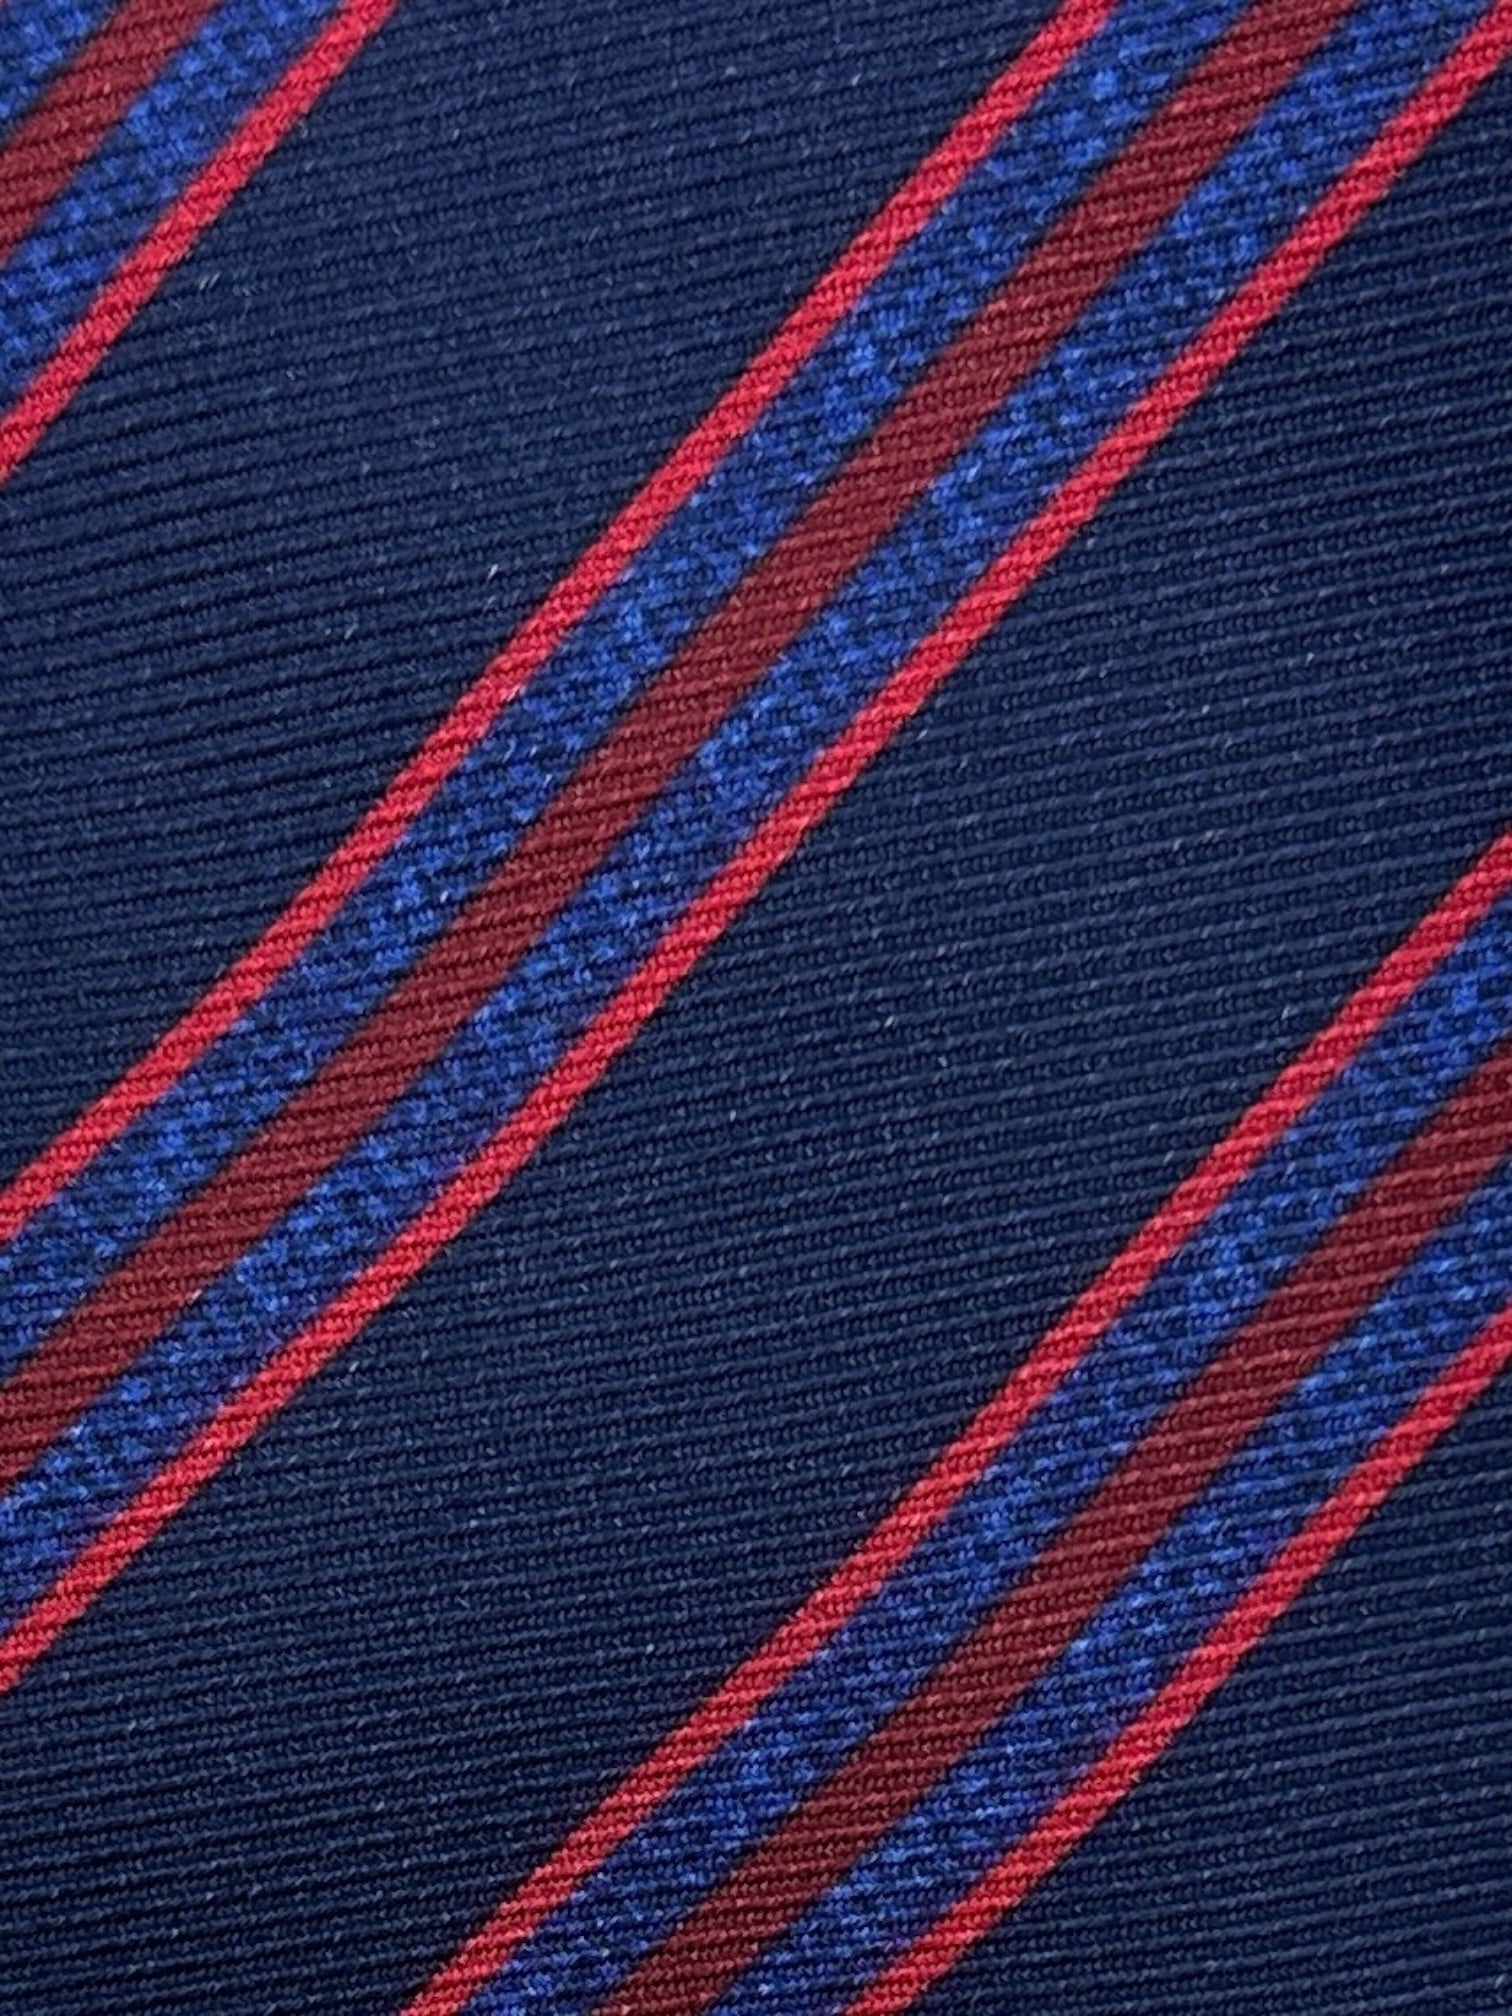 Kiton 7-Fold Blue and Red Stripe Silk Tie